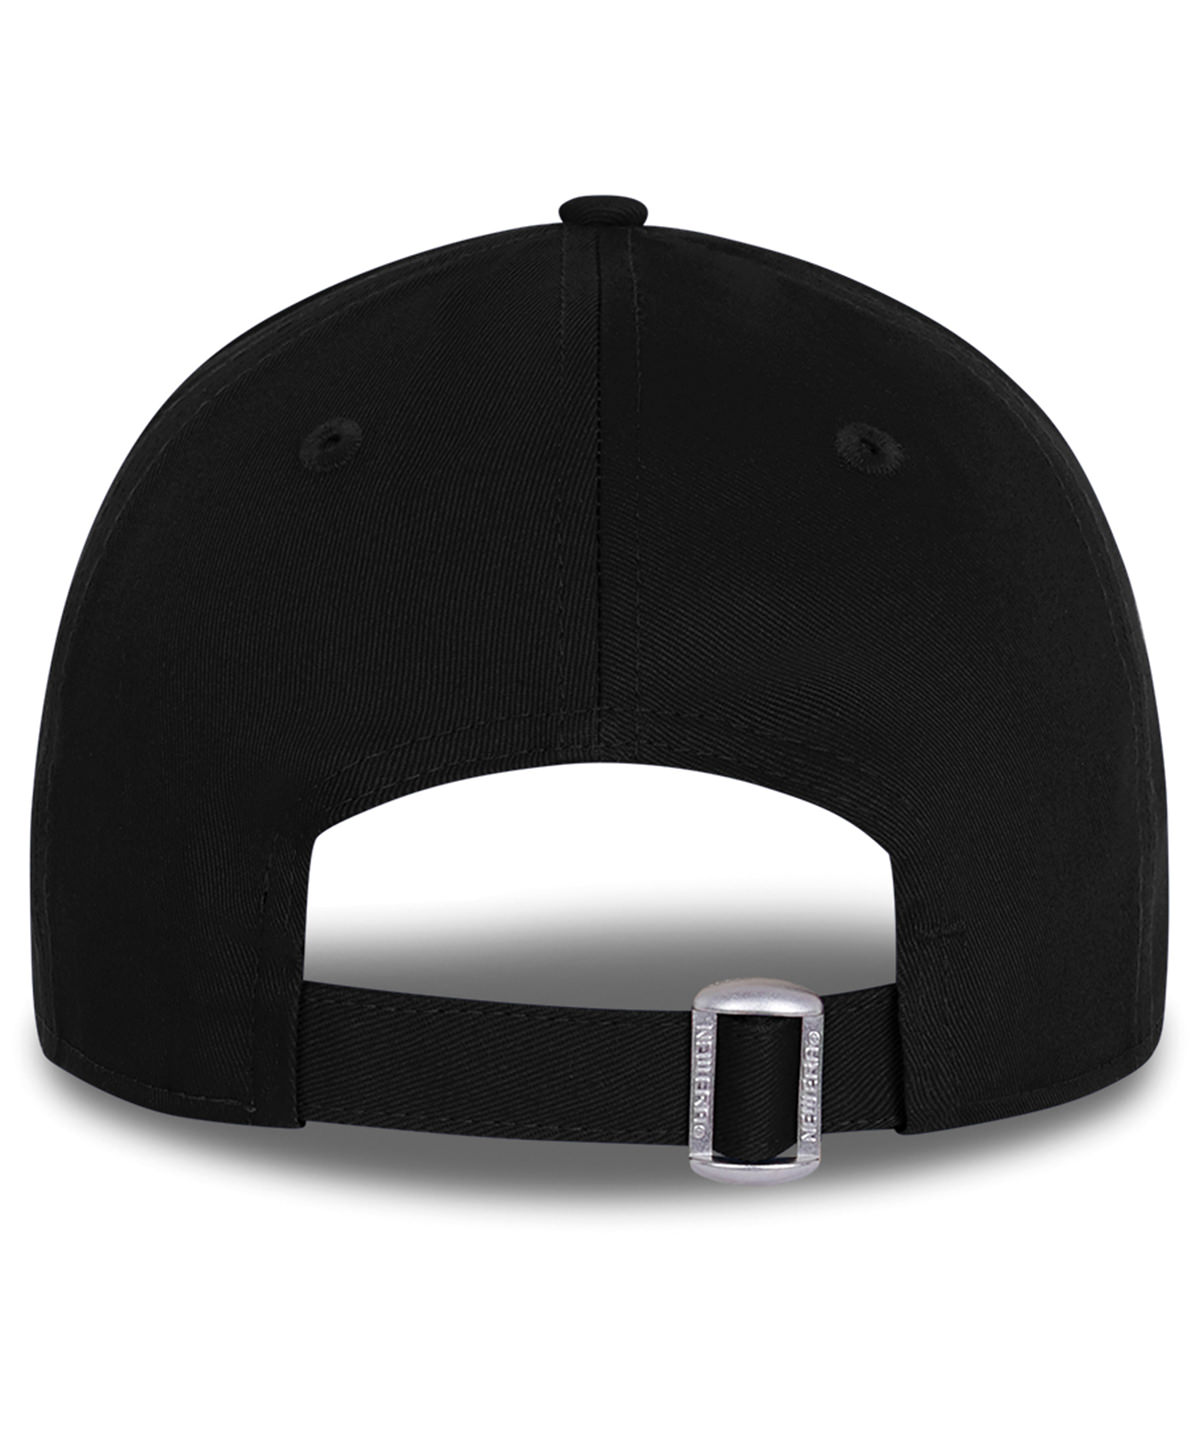 new era-uk 9FORTY cap